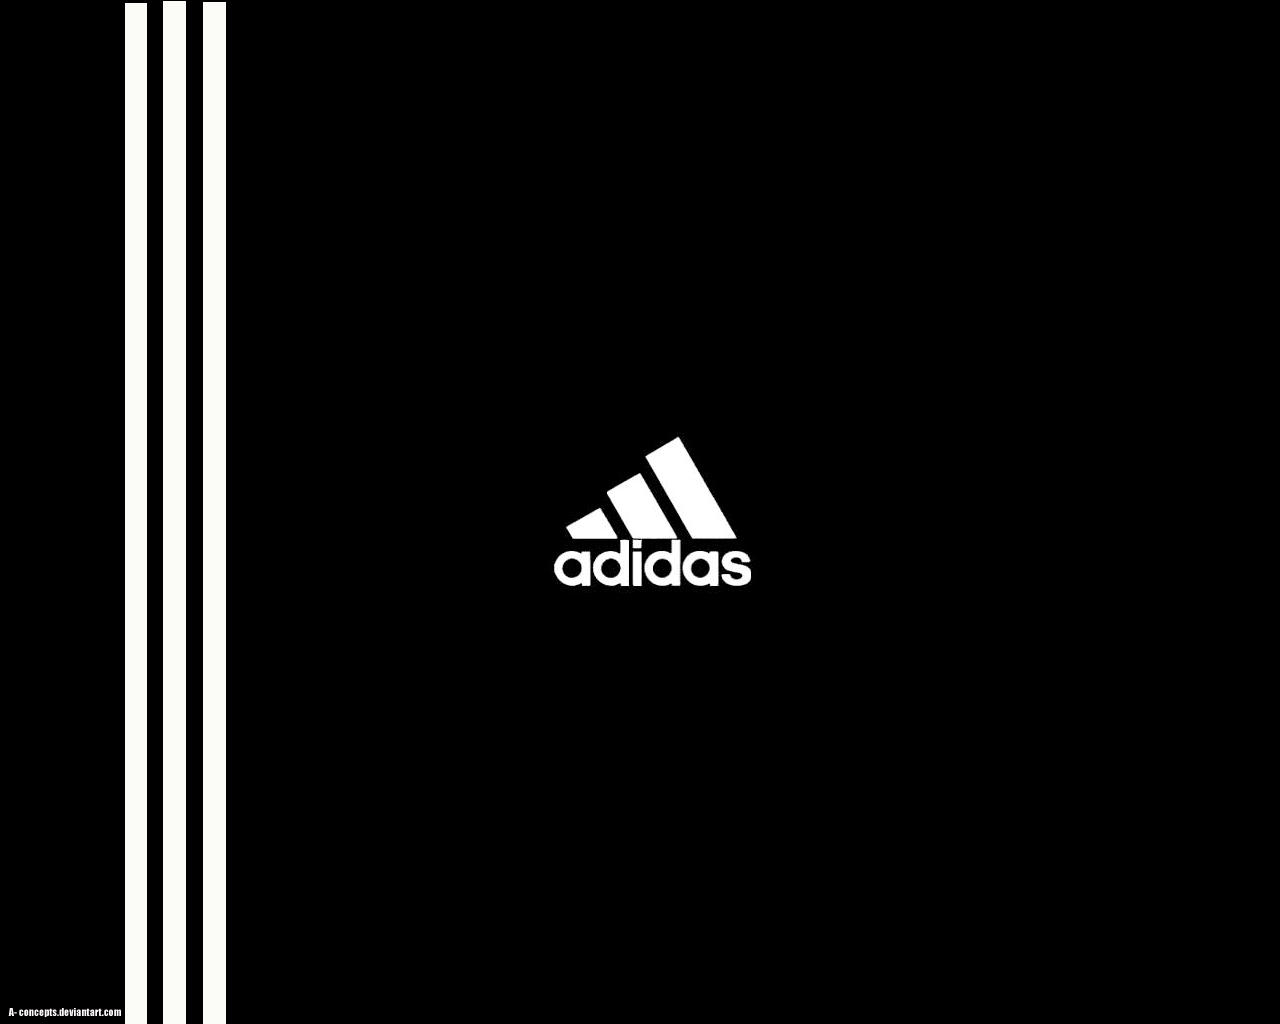 Adidas Logo n39; Stripes by aconcepts on DeviantArt